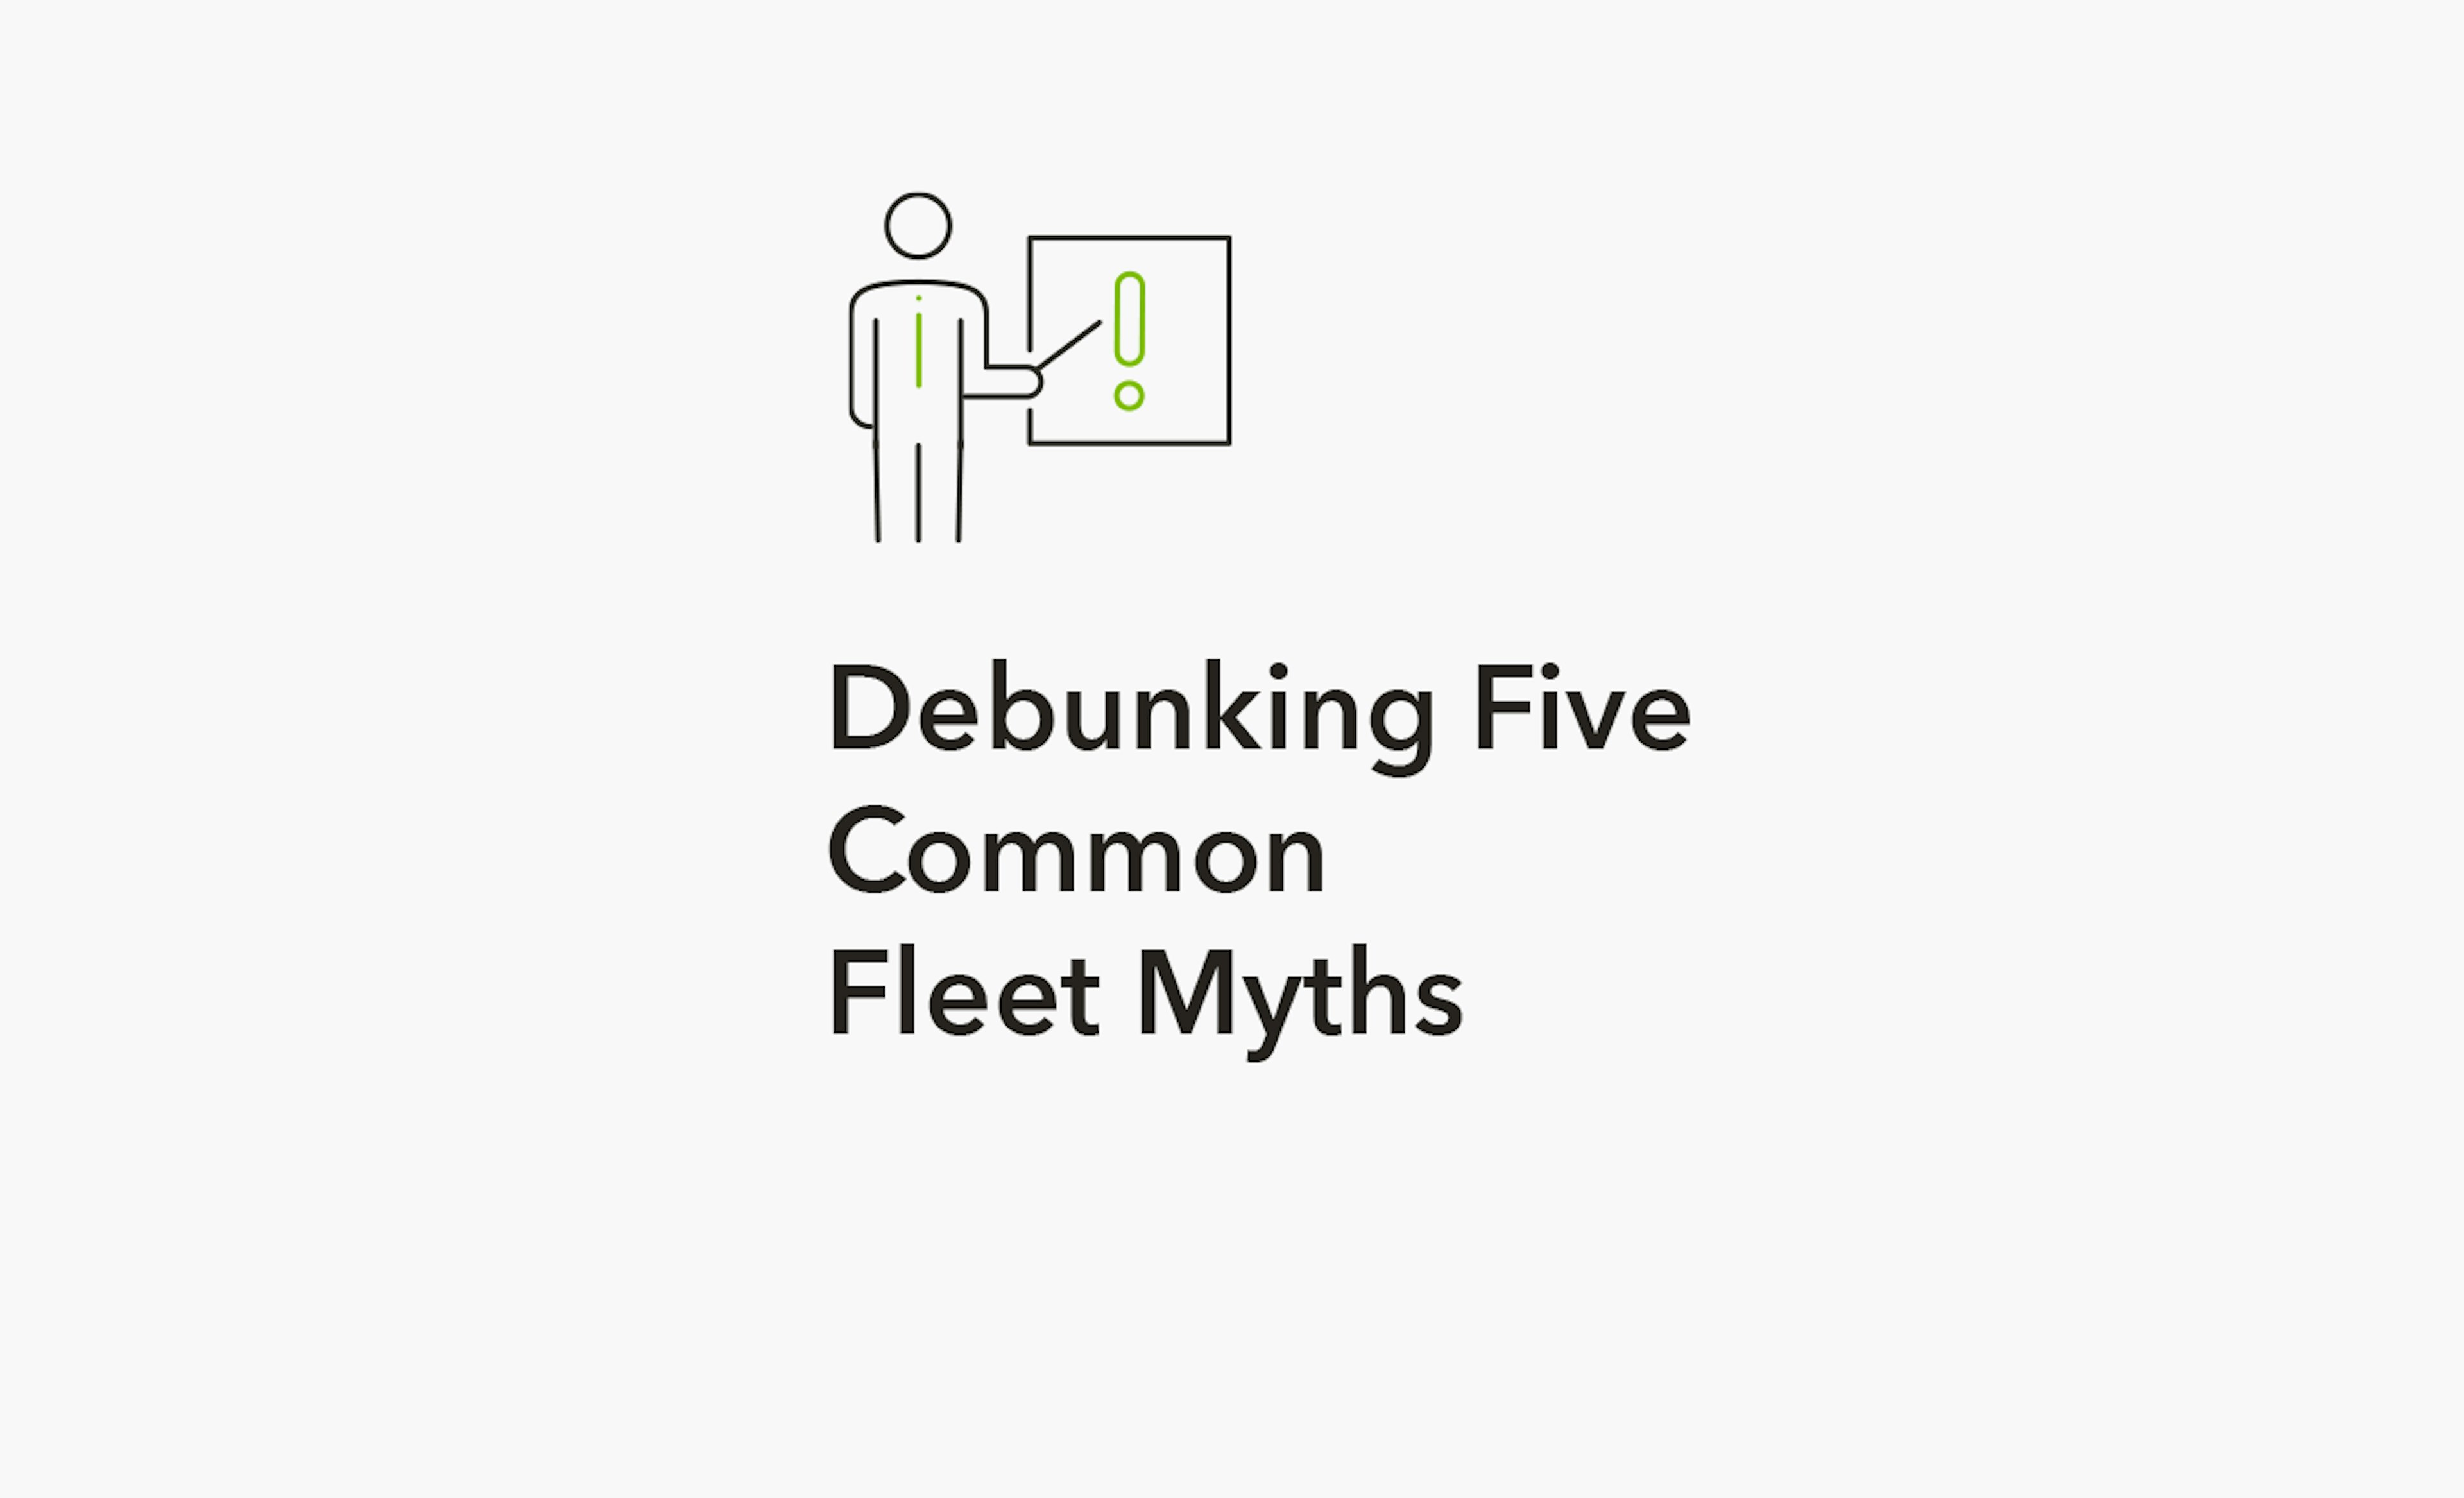 Debunking Five Common Fleet Myths Graphic